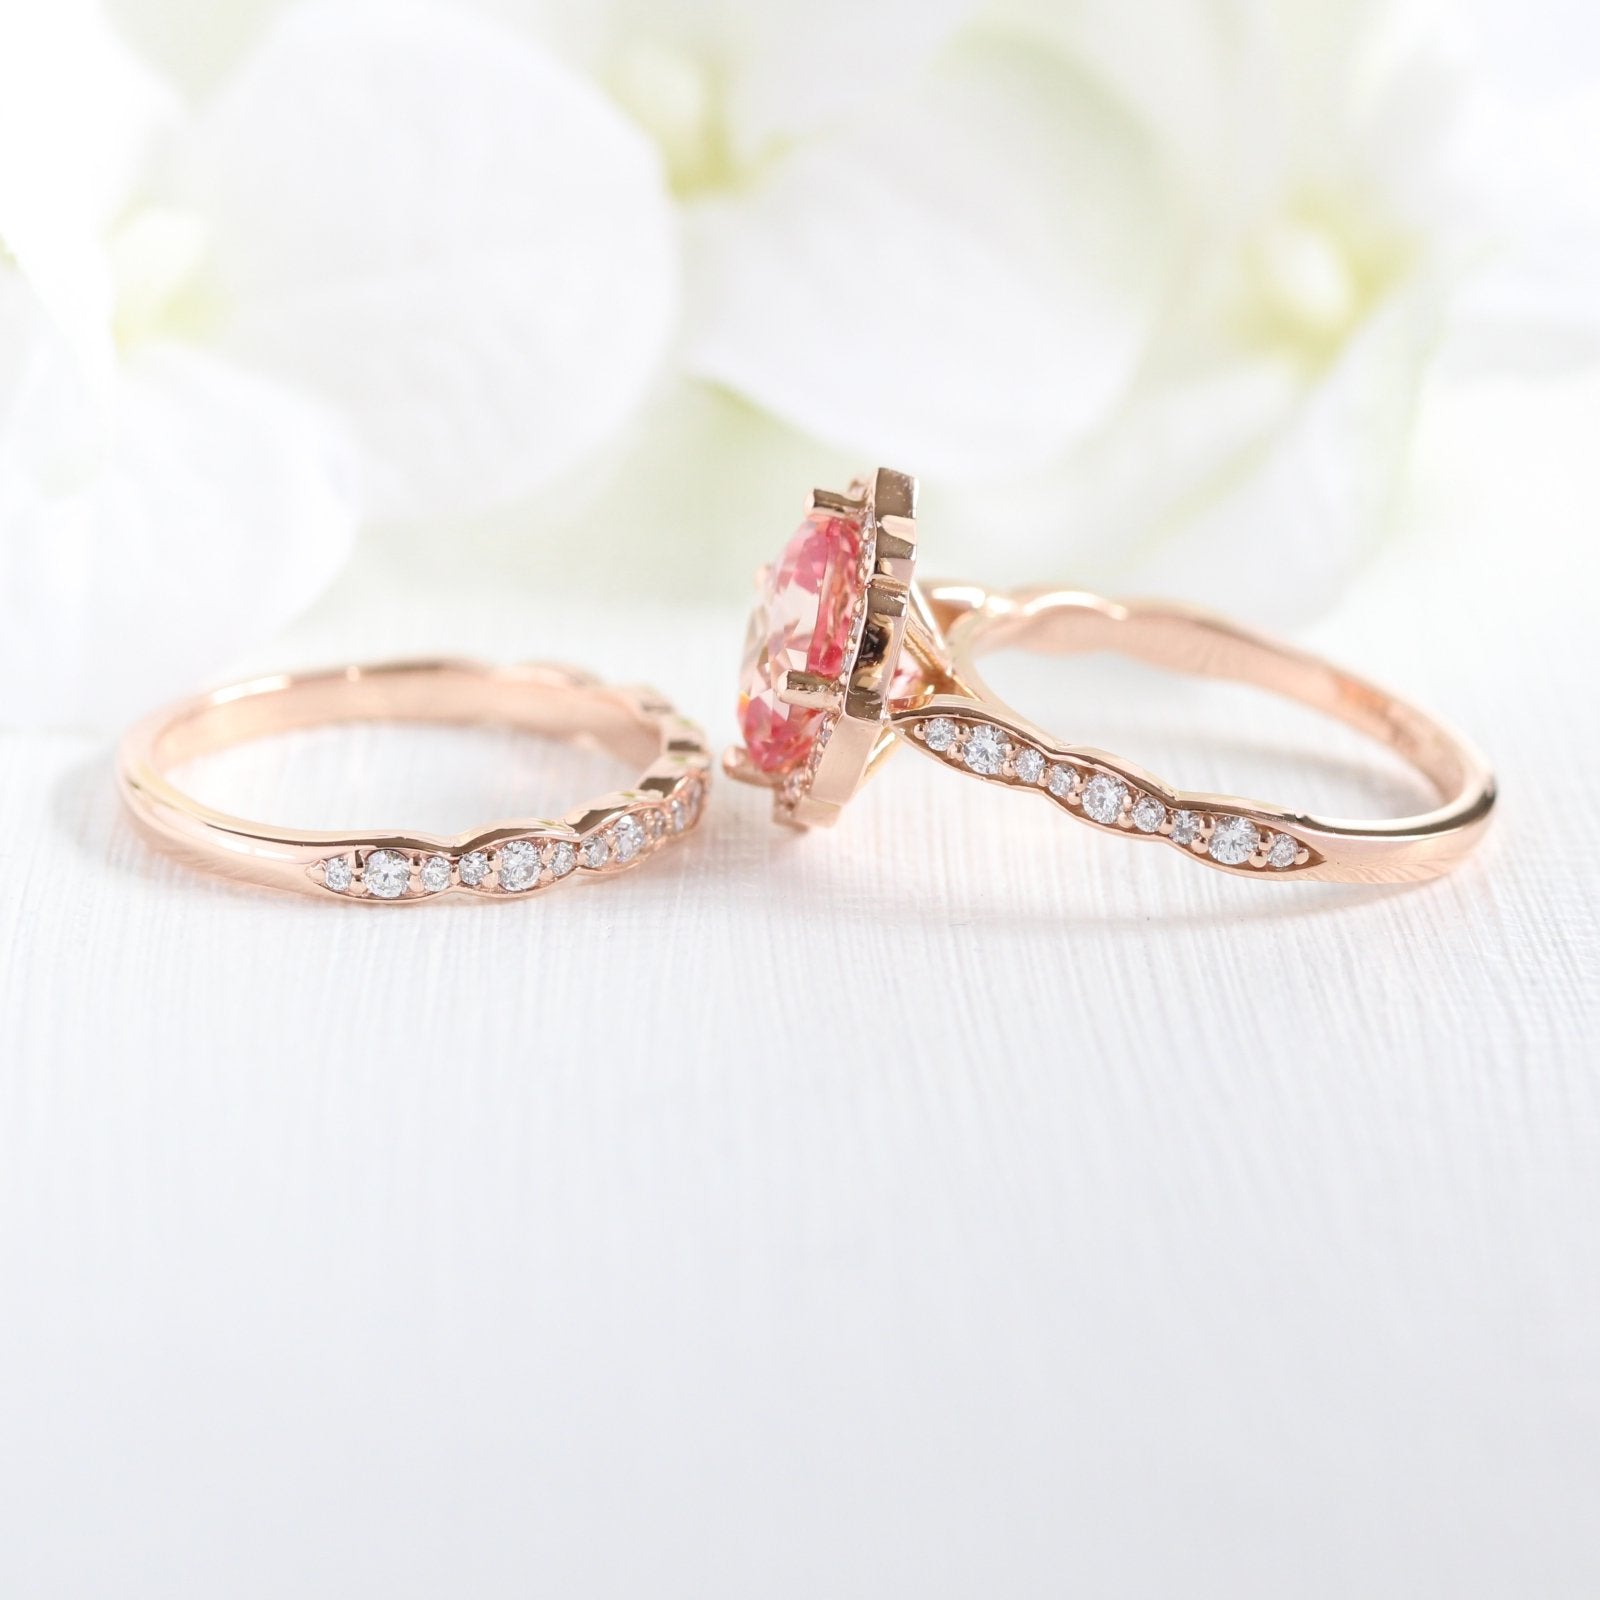 rose gold peach sapphire engagement ring bridal set vintage floral diamond wedding ring set by la more design